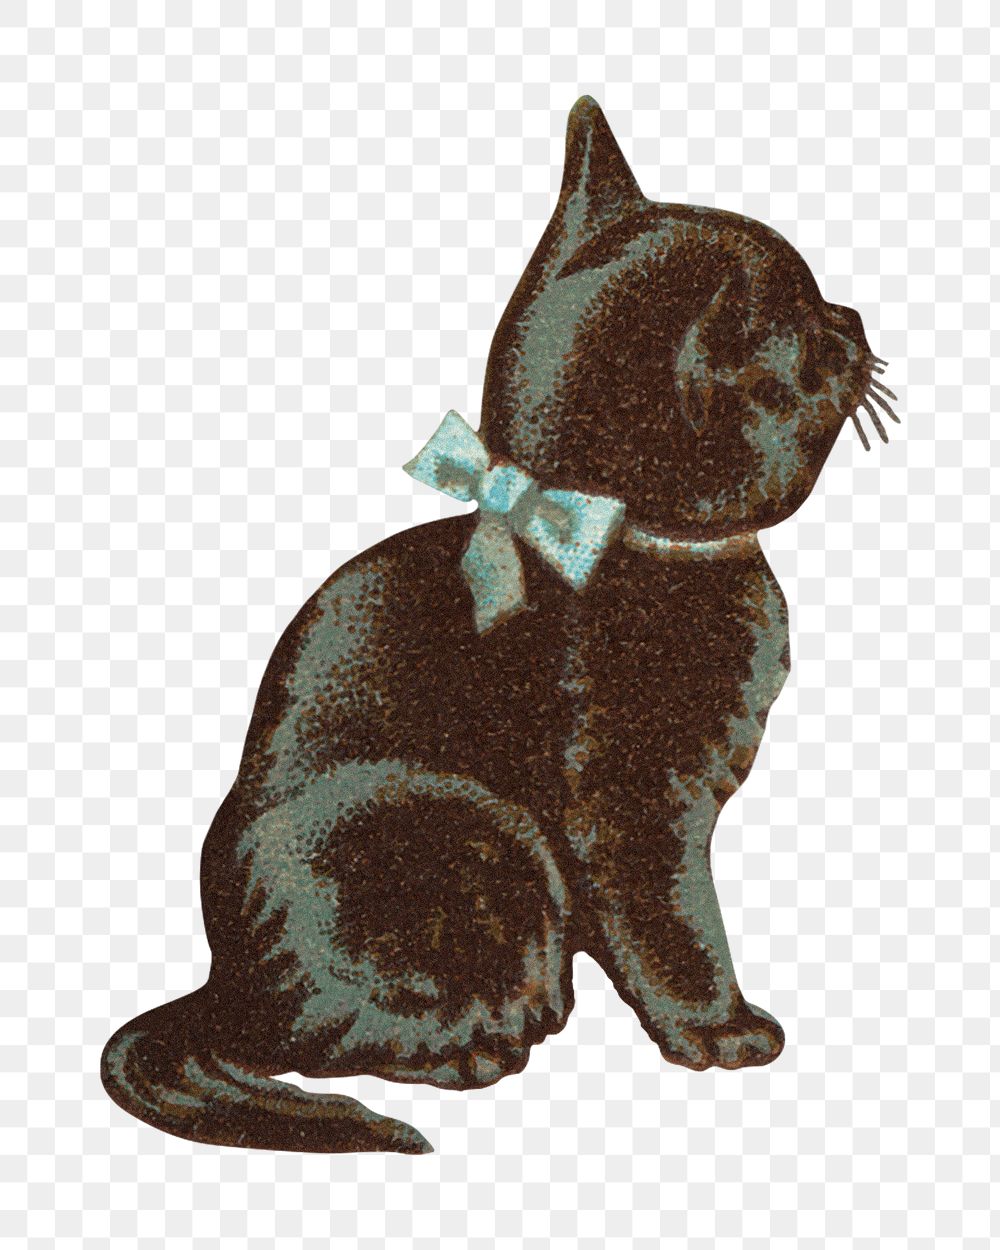 PNG Little kitten, vintage pet animal illustration, transparent background. Remixed by rawpixel.